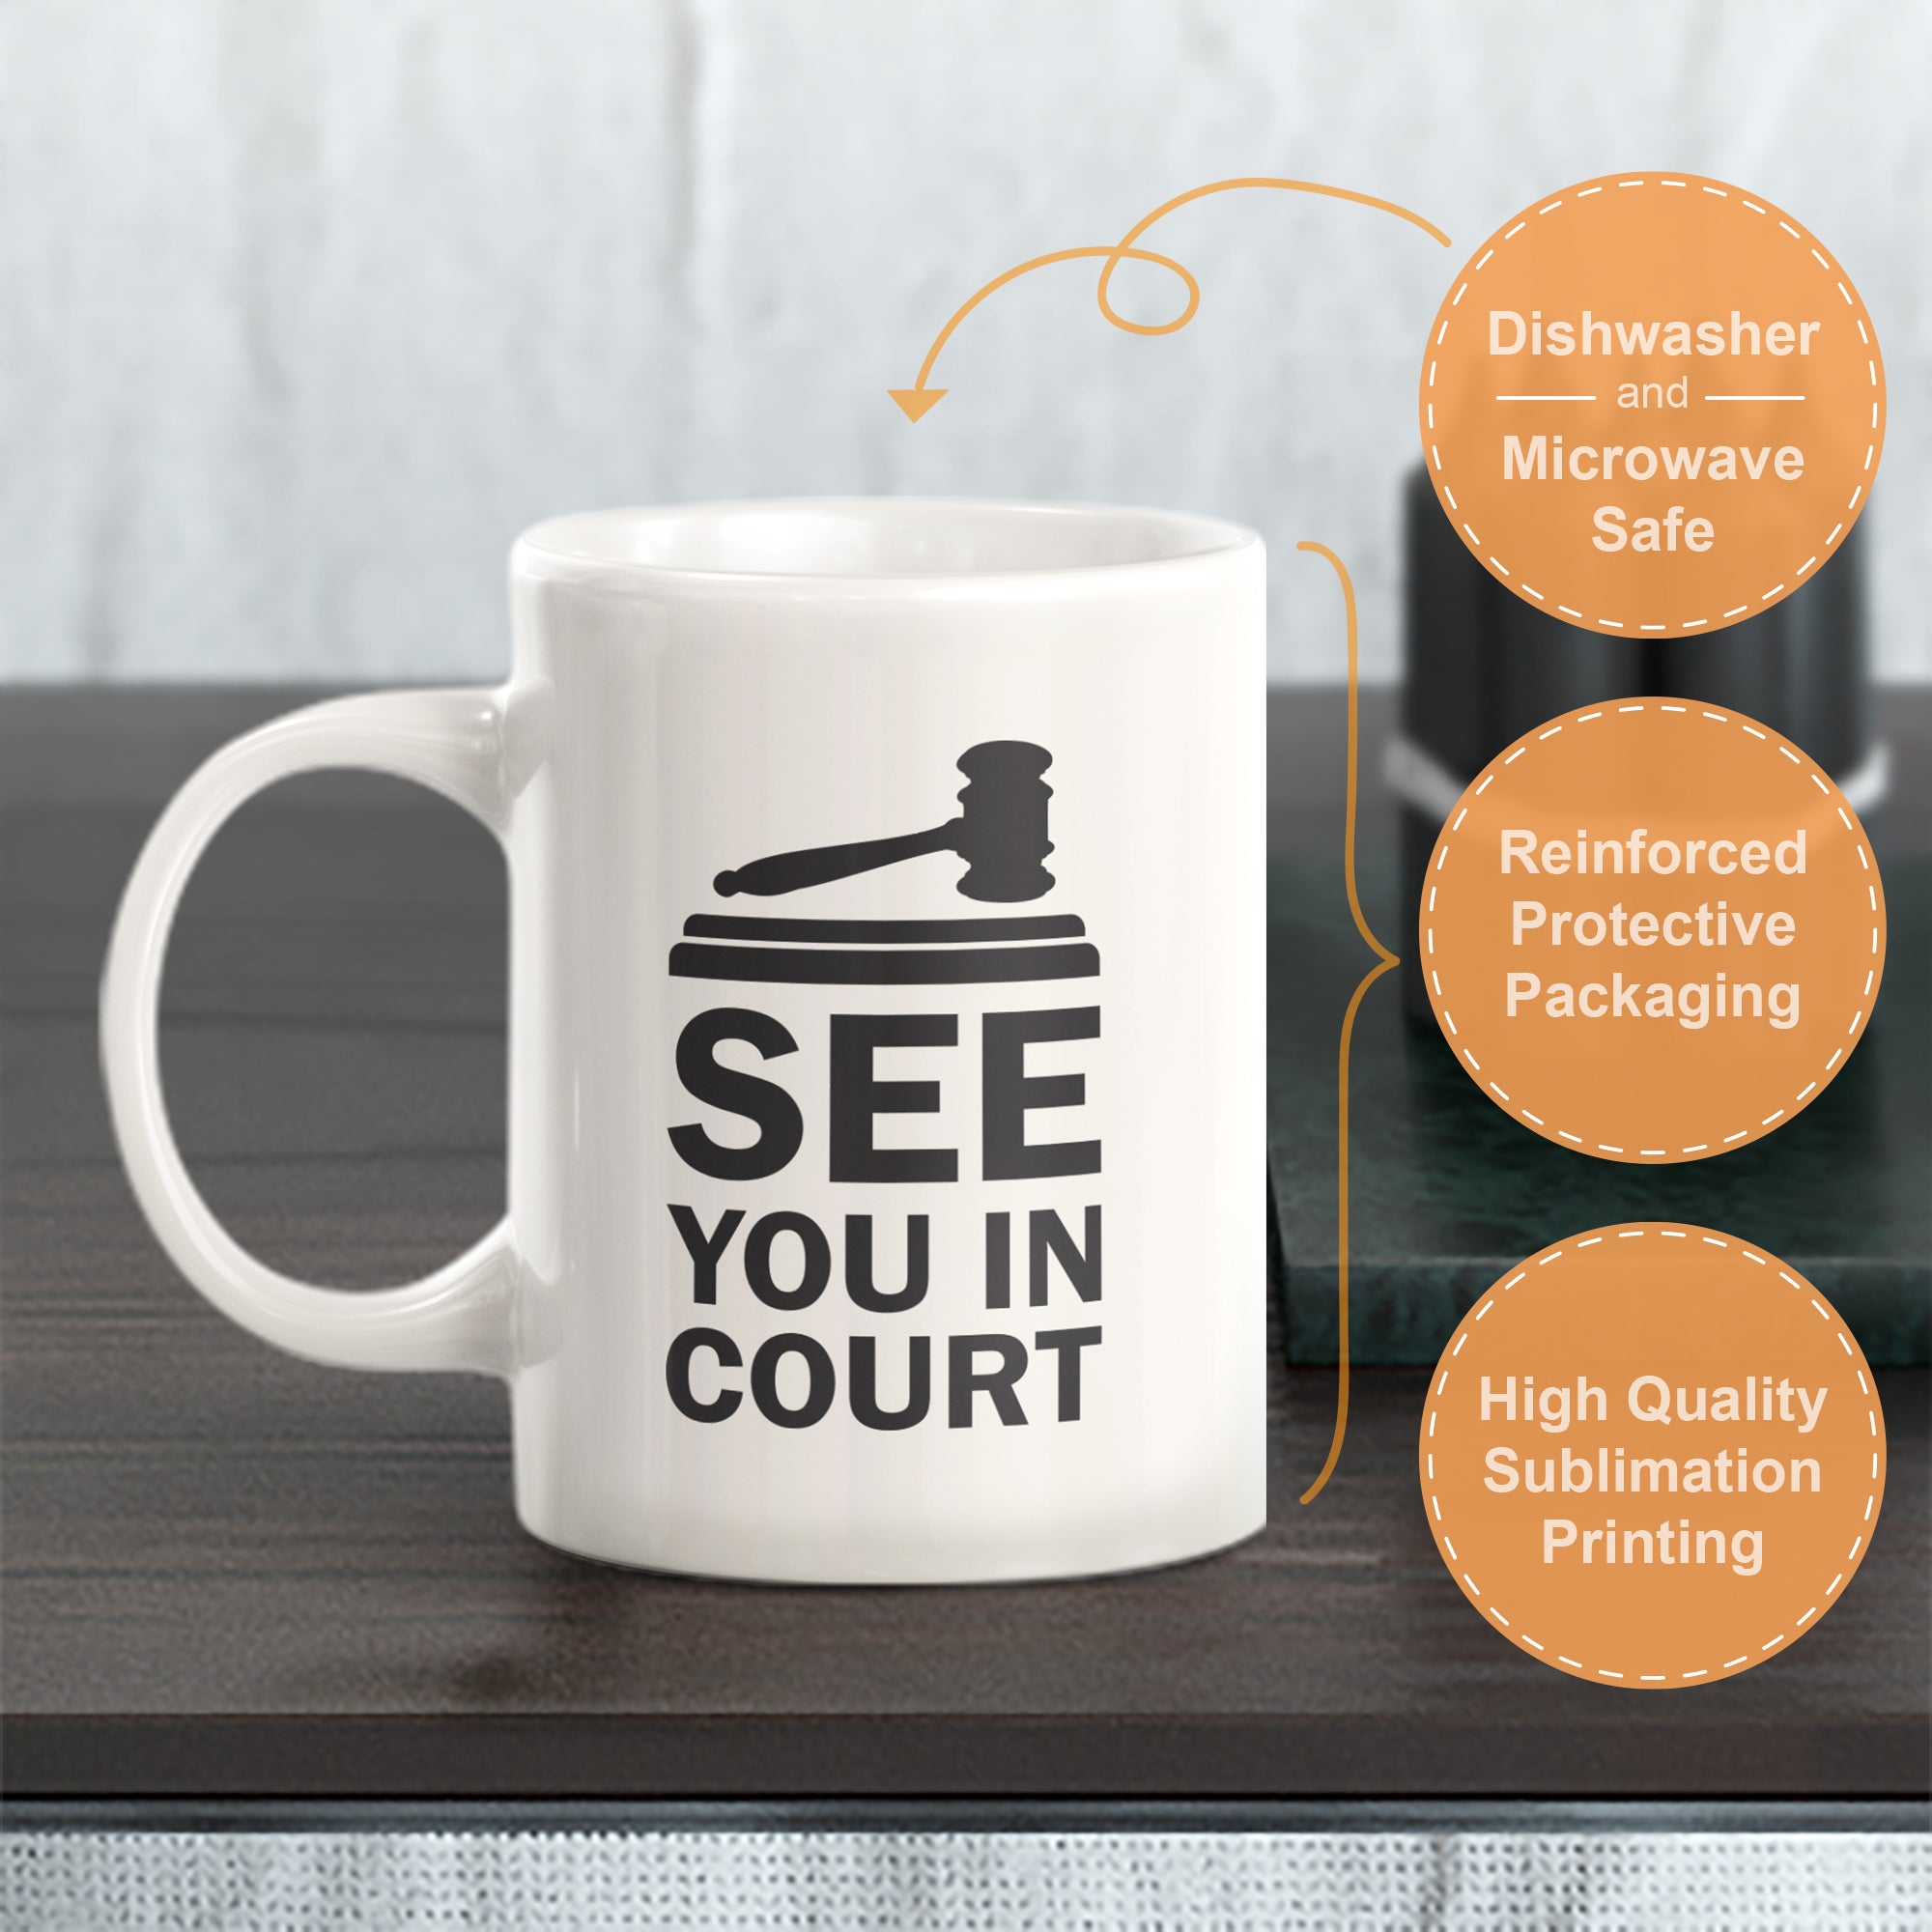 See You In Court Coffee Mug